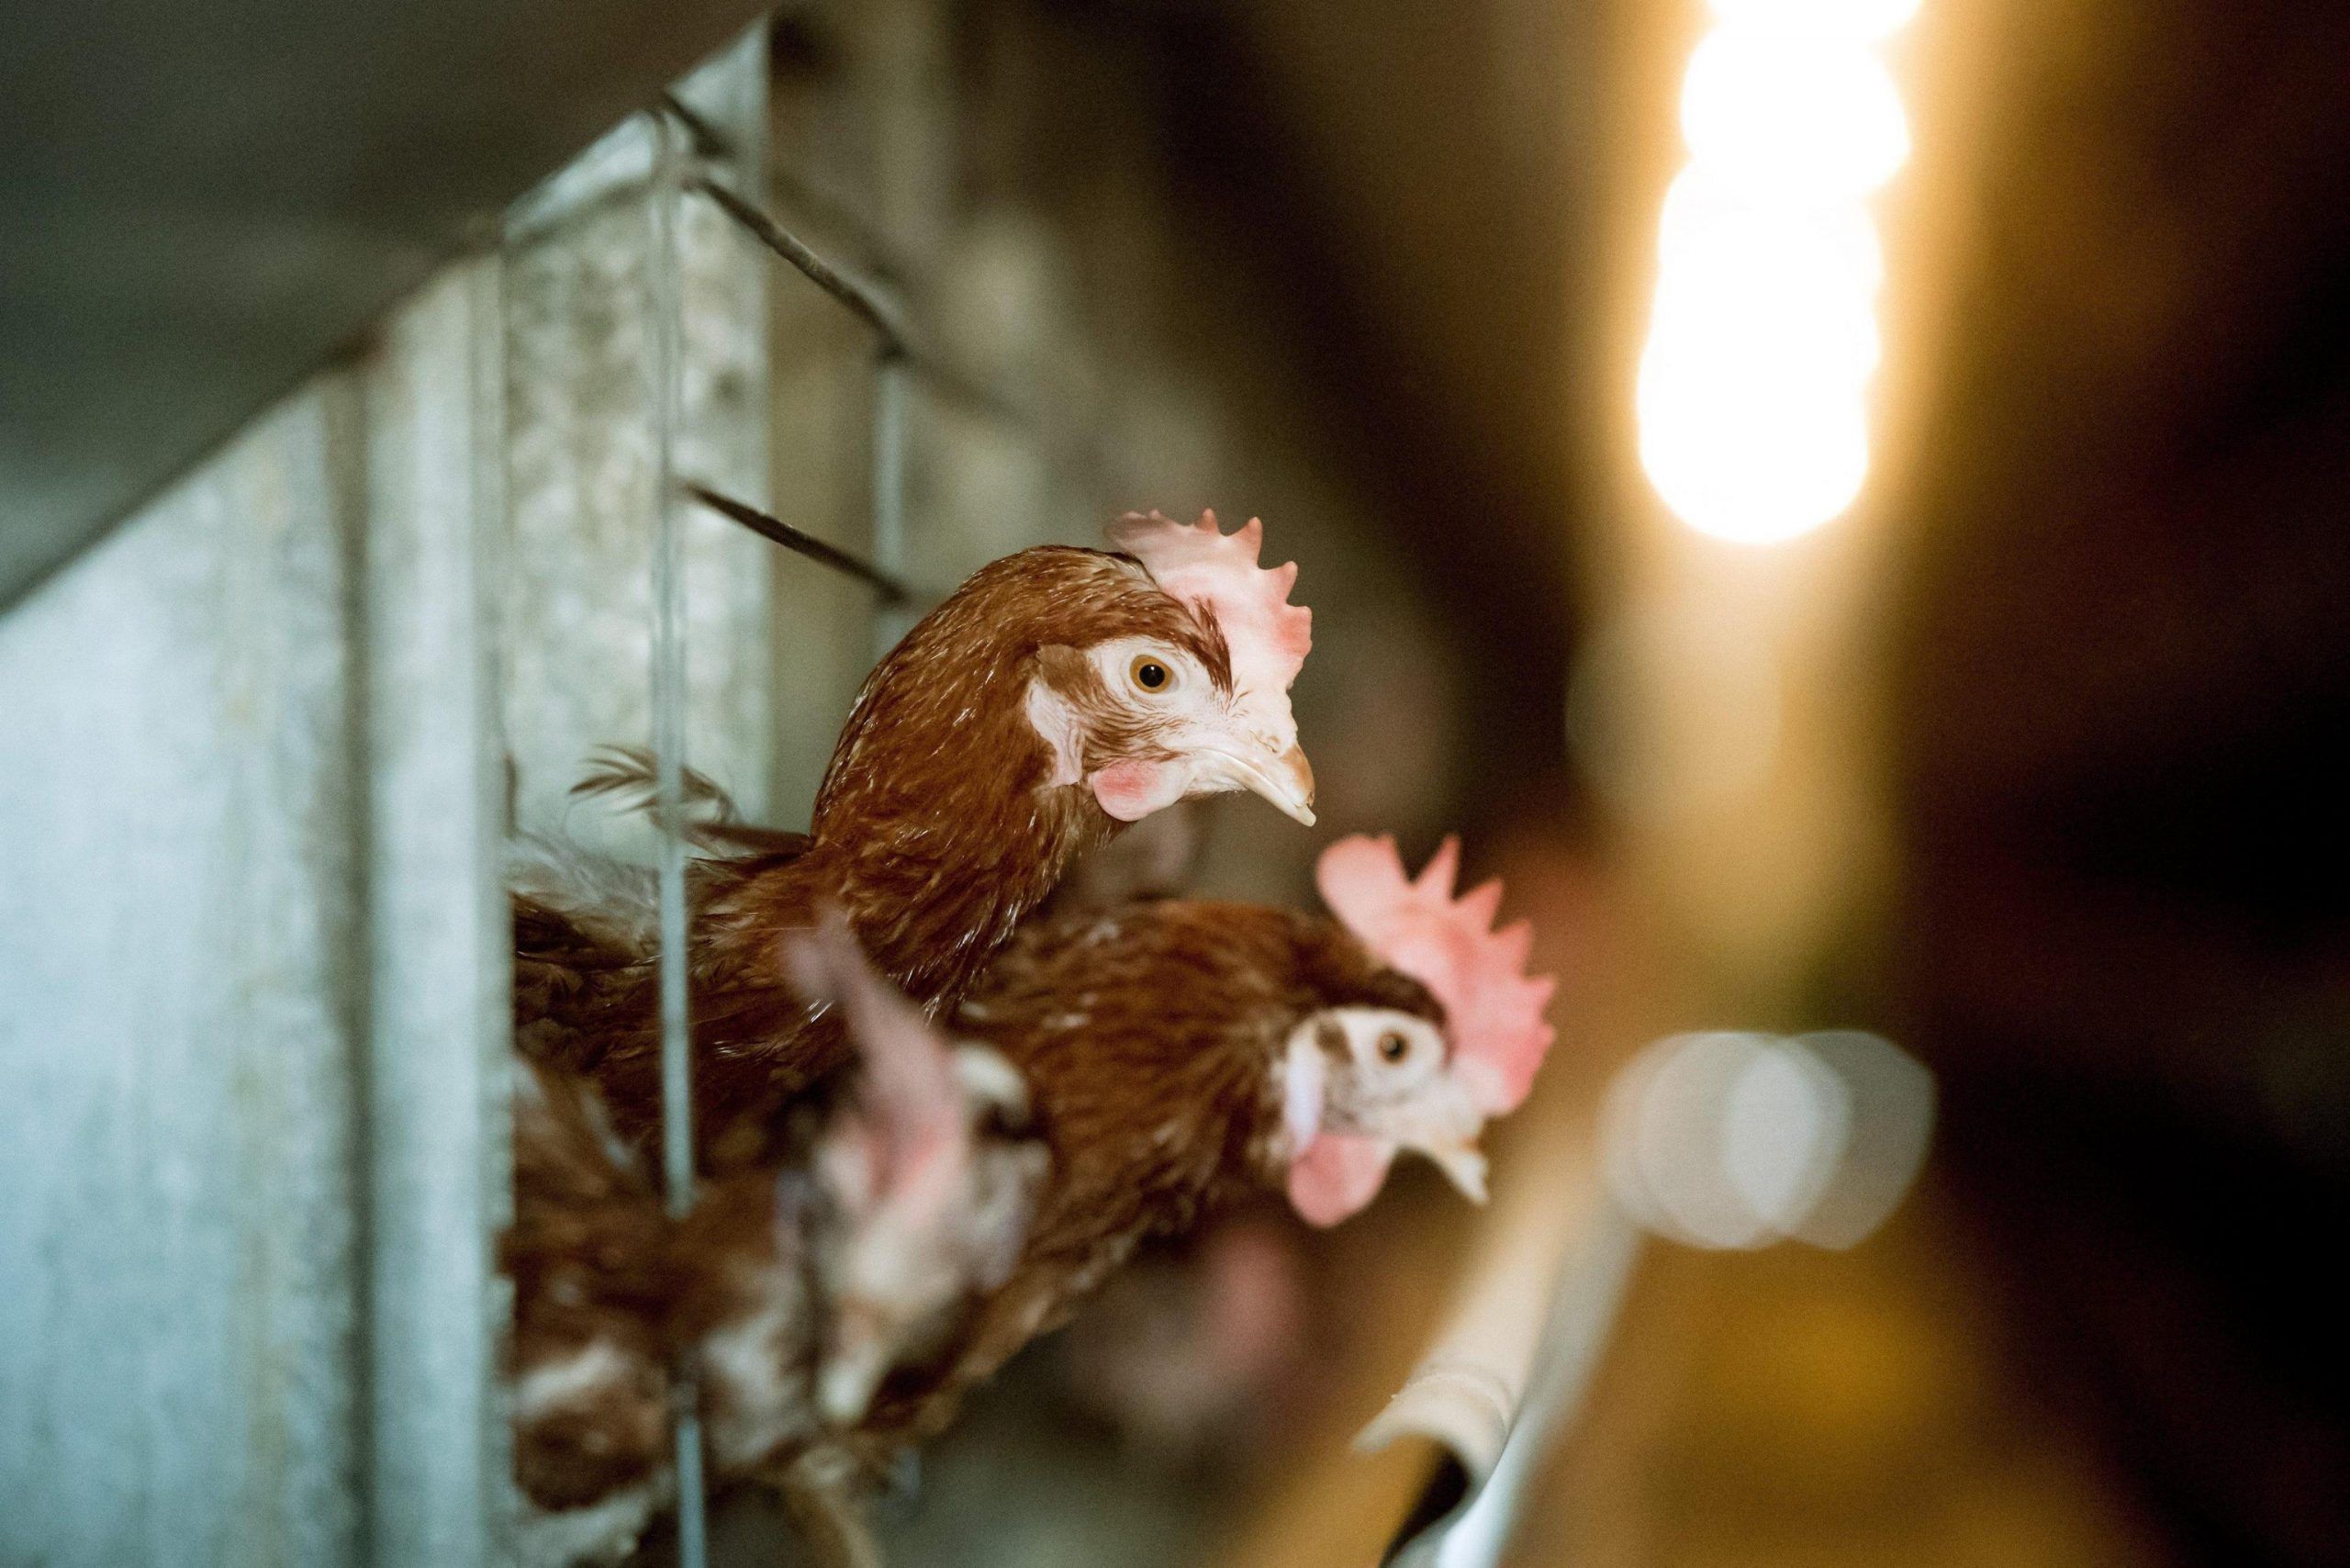 farmers keep poulty indoors against bird flu